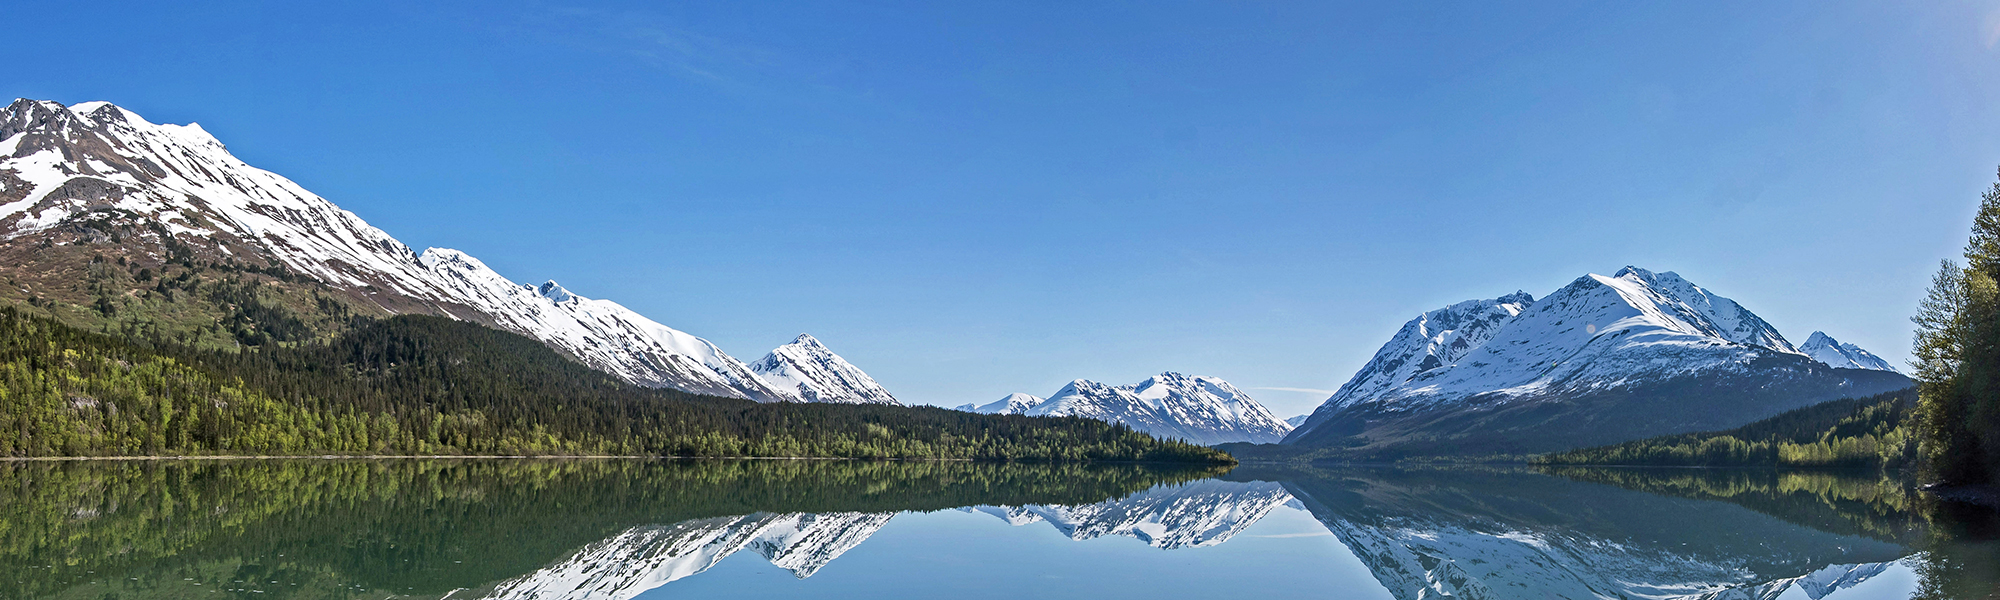 Voyage sur mesure Alaska © Rocky Grimes - Adobe-Stock